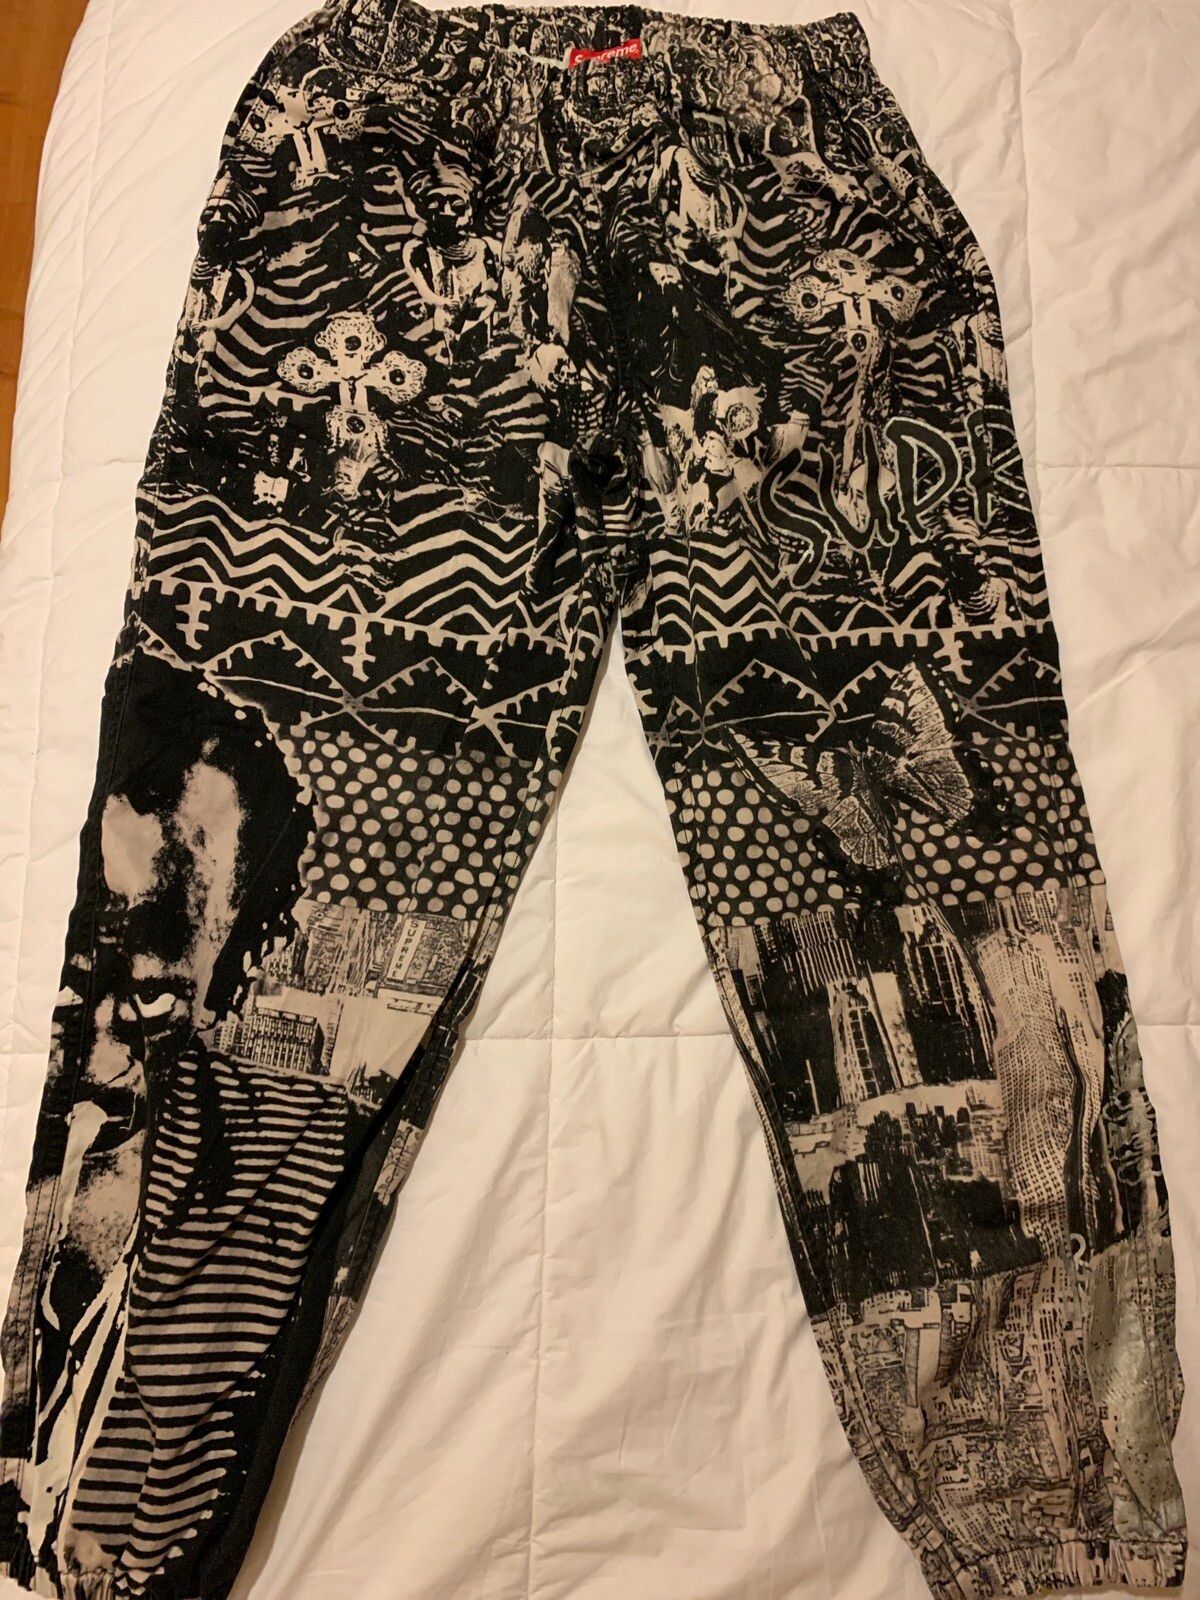 Supreme Supreme x Miles Davis Skate Pants (Black and white) | Grailed